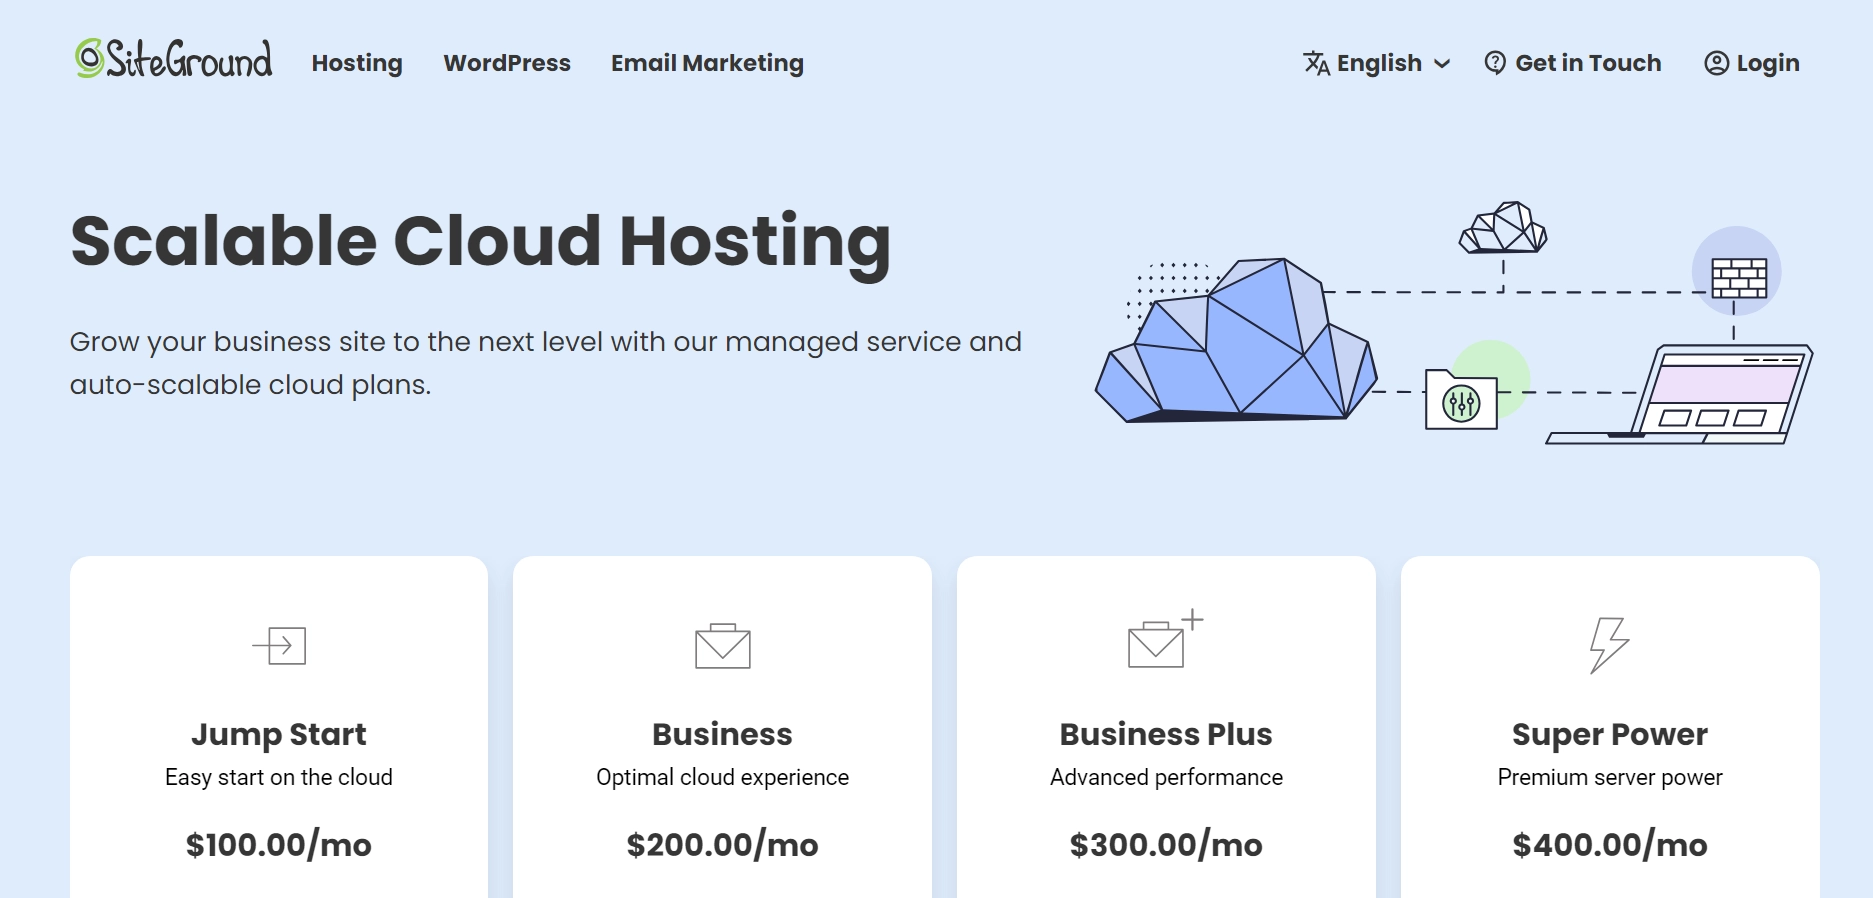 Siteground cloud hosting